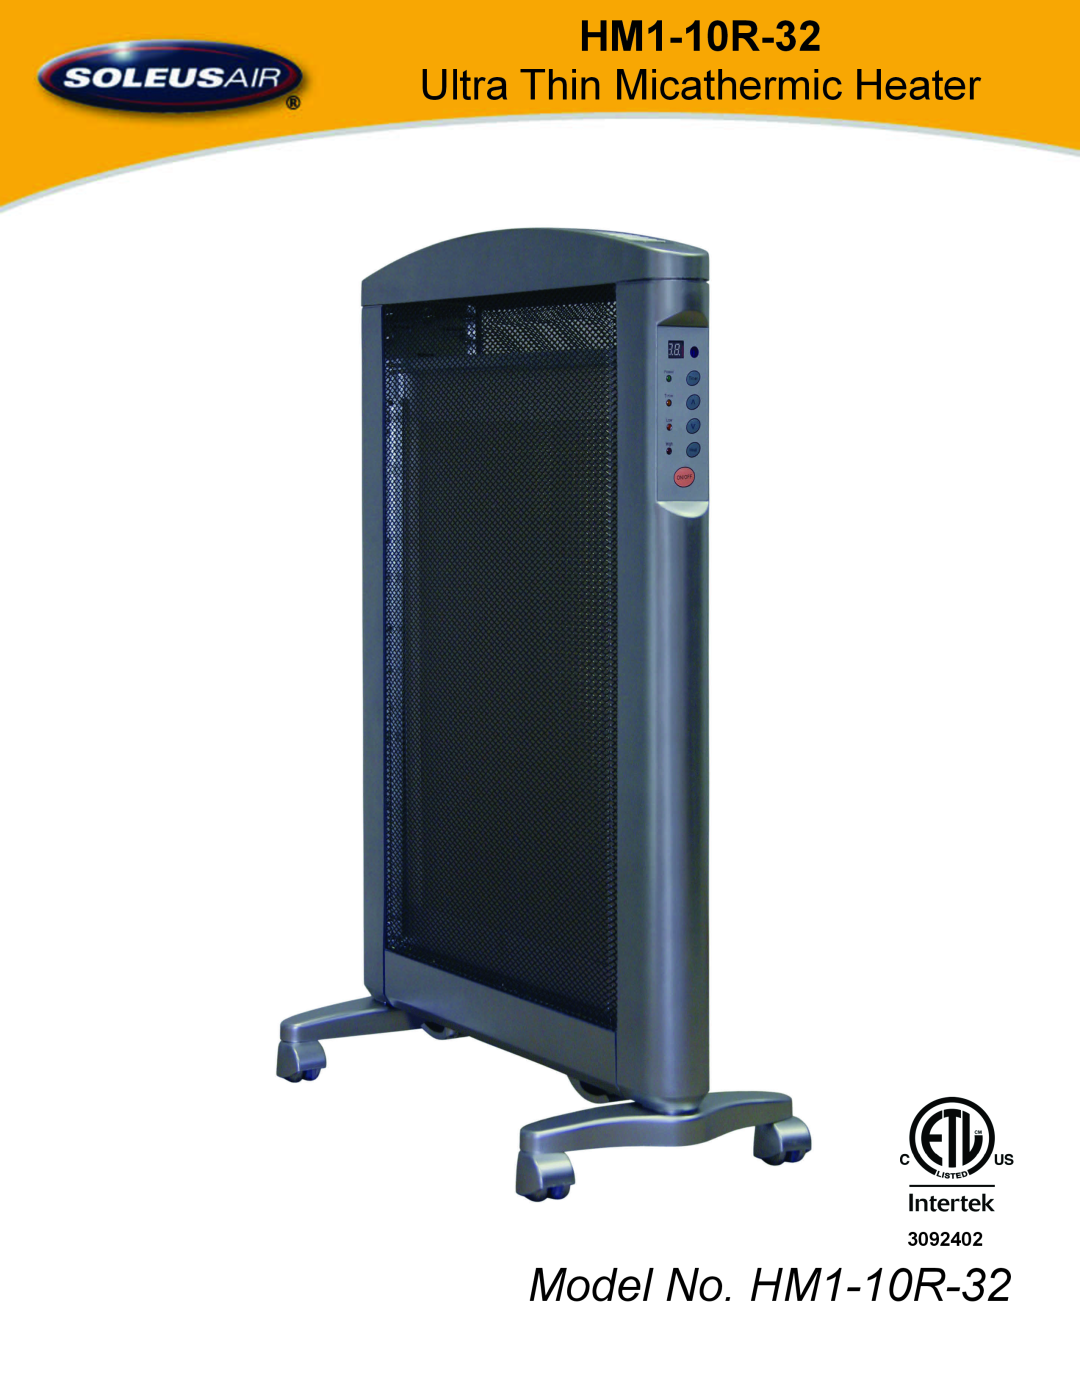 Soleus Air manual Model No. HM1-10R-32, Ultra Thin Micathermic Heater, 3092402 